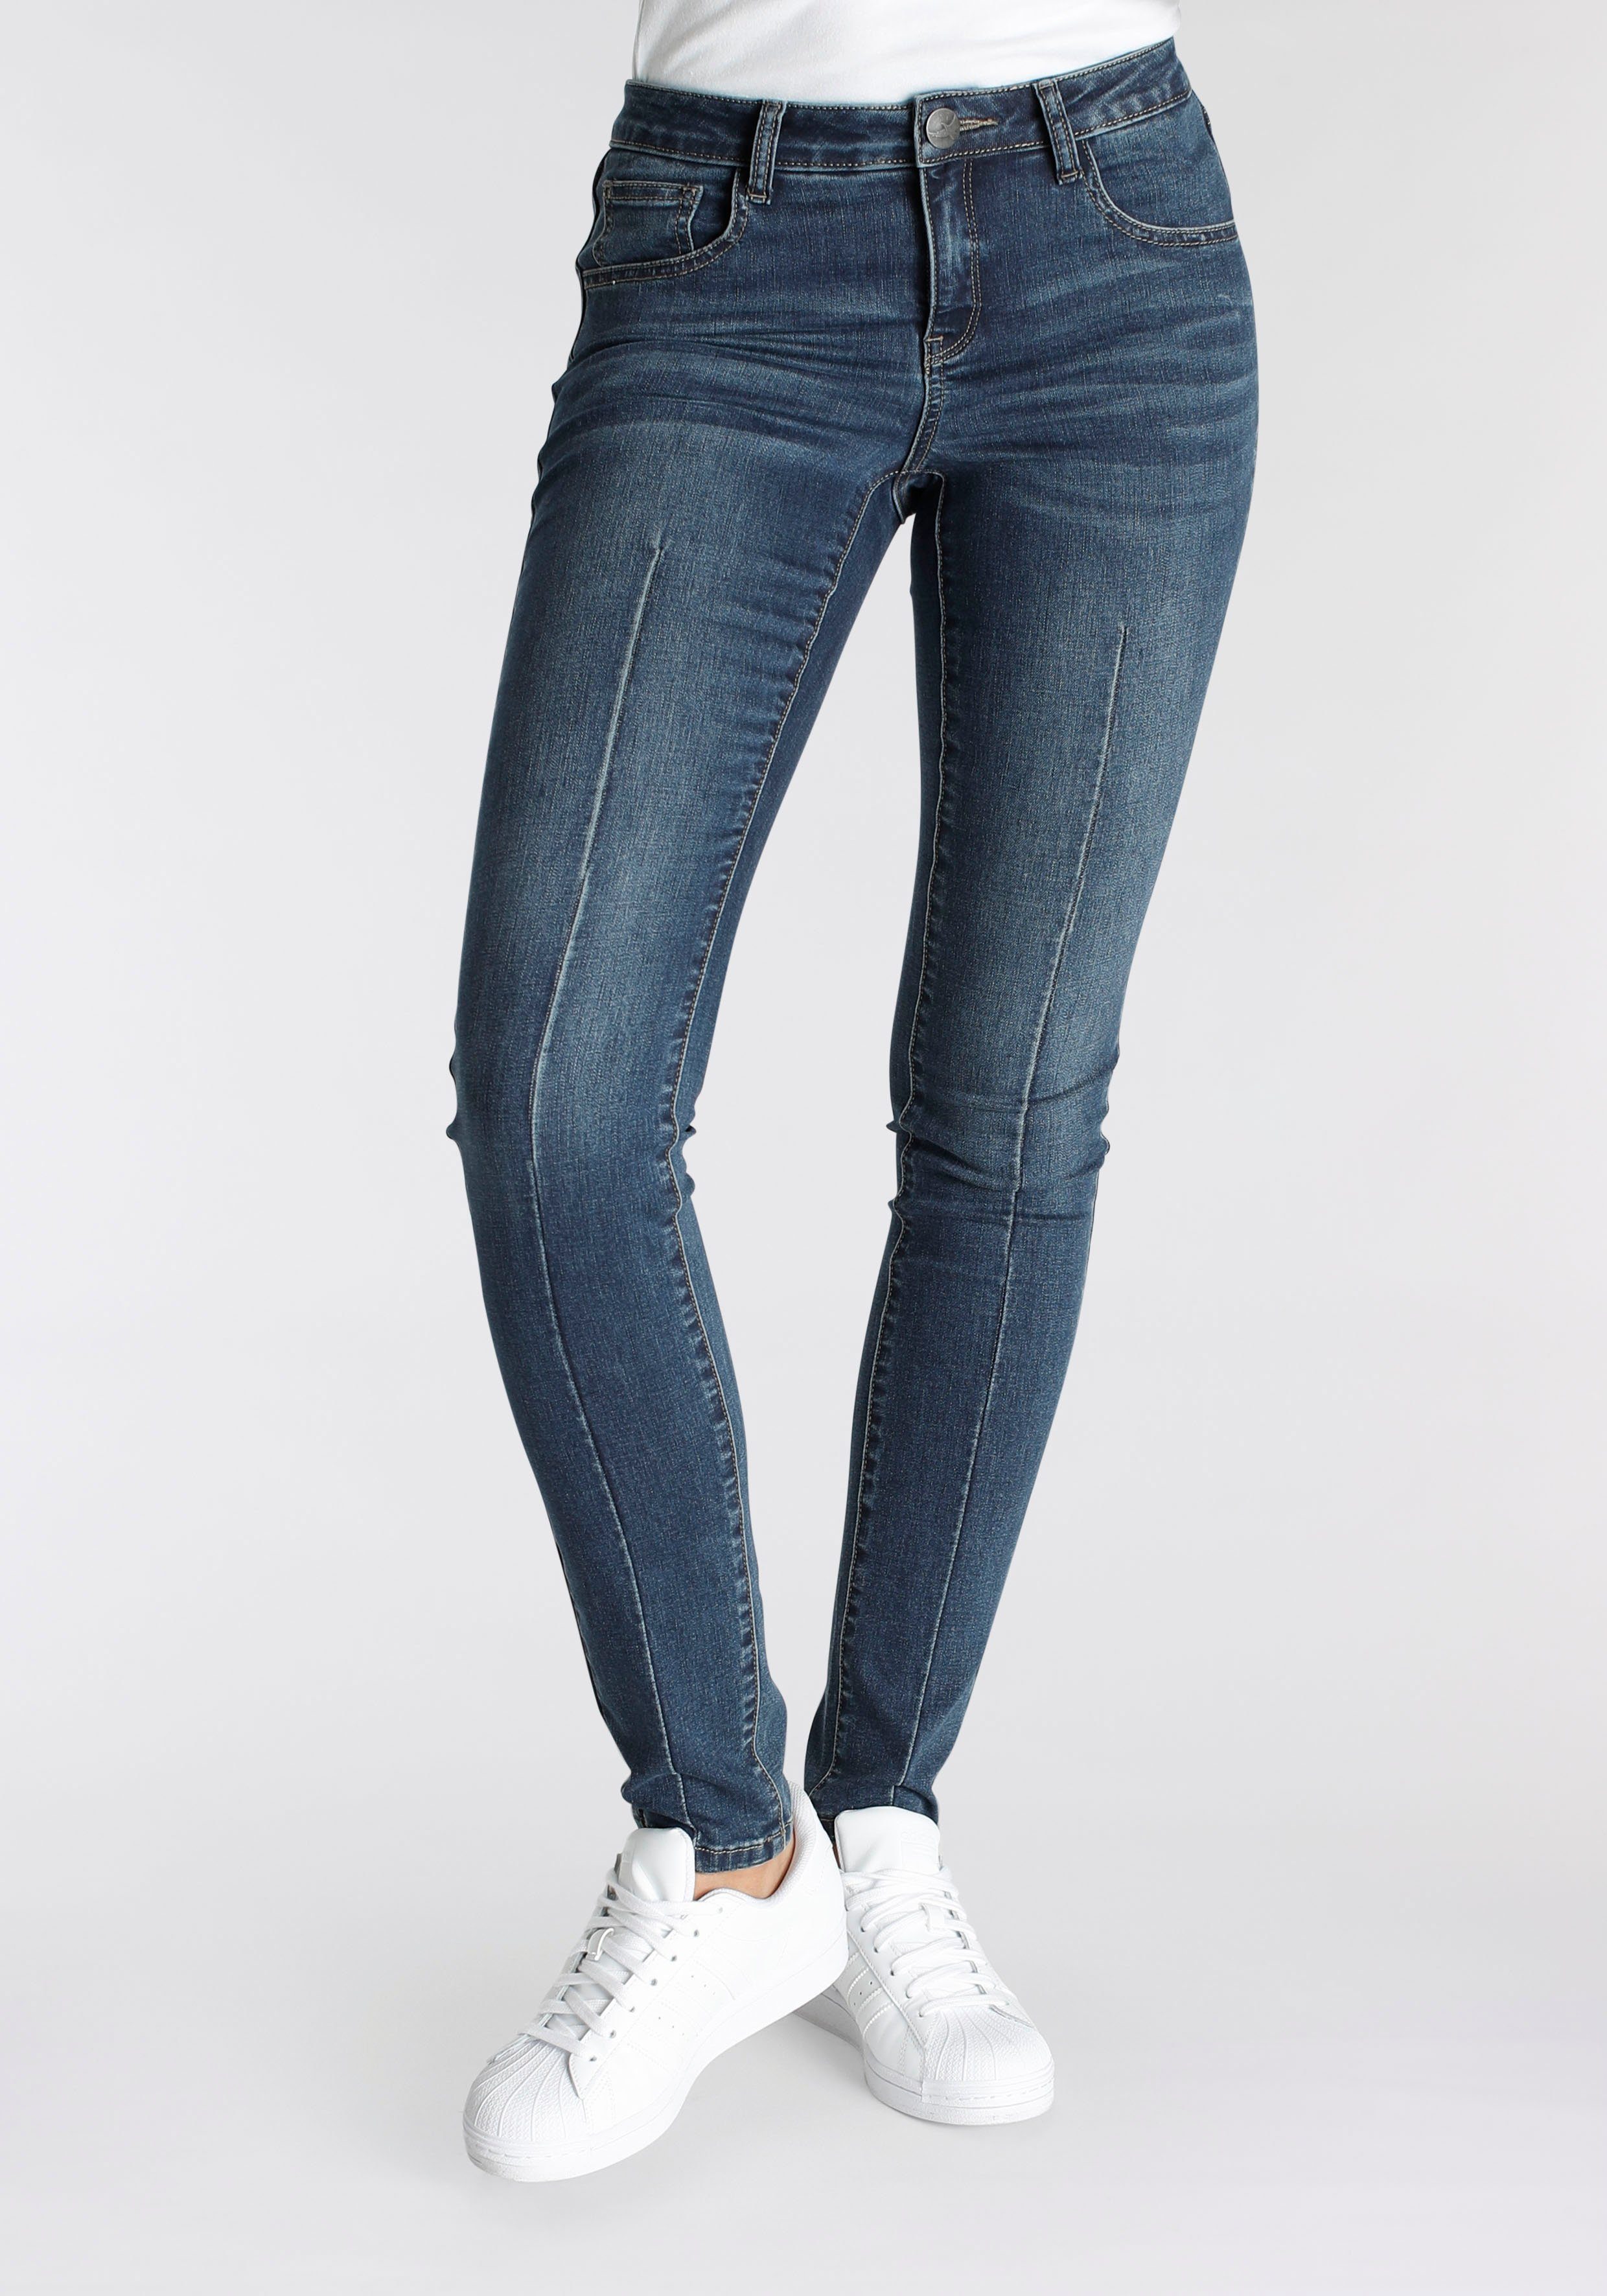 Arizona Skinny-fit-Jeans Ultra-Stretch, sehr bequem, gut zu kombinieren Mid Waist high performance stretch Denim normale Leibhöhe figurbetont